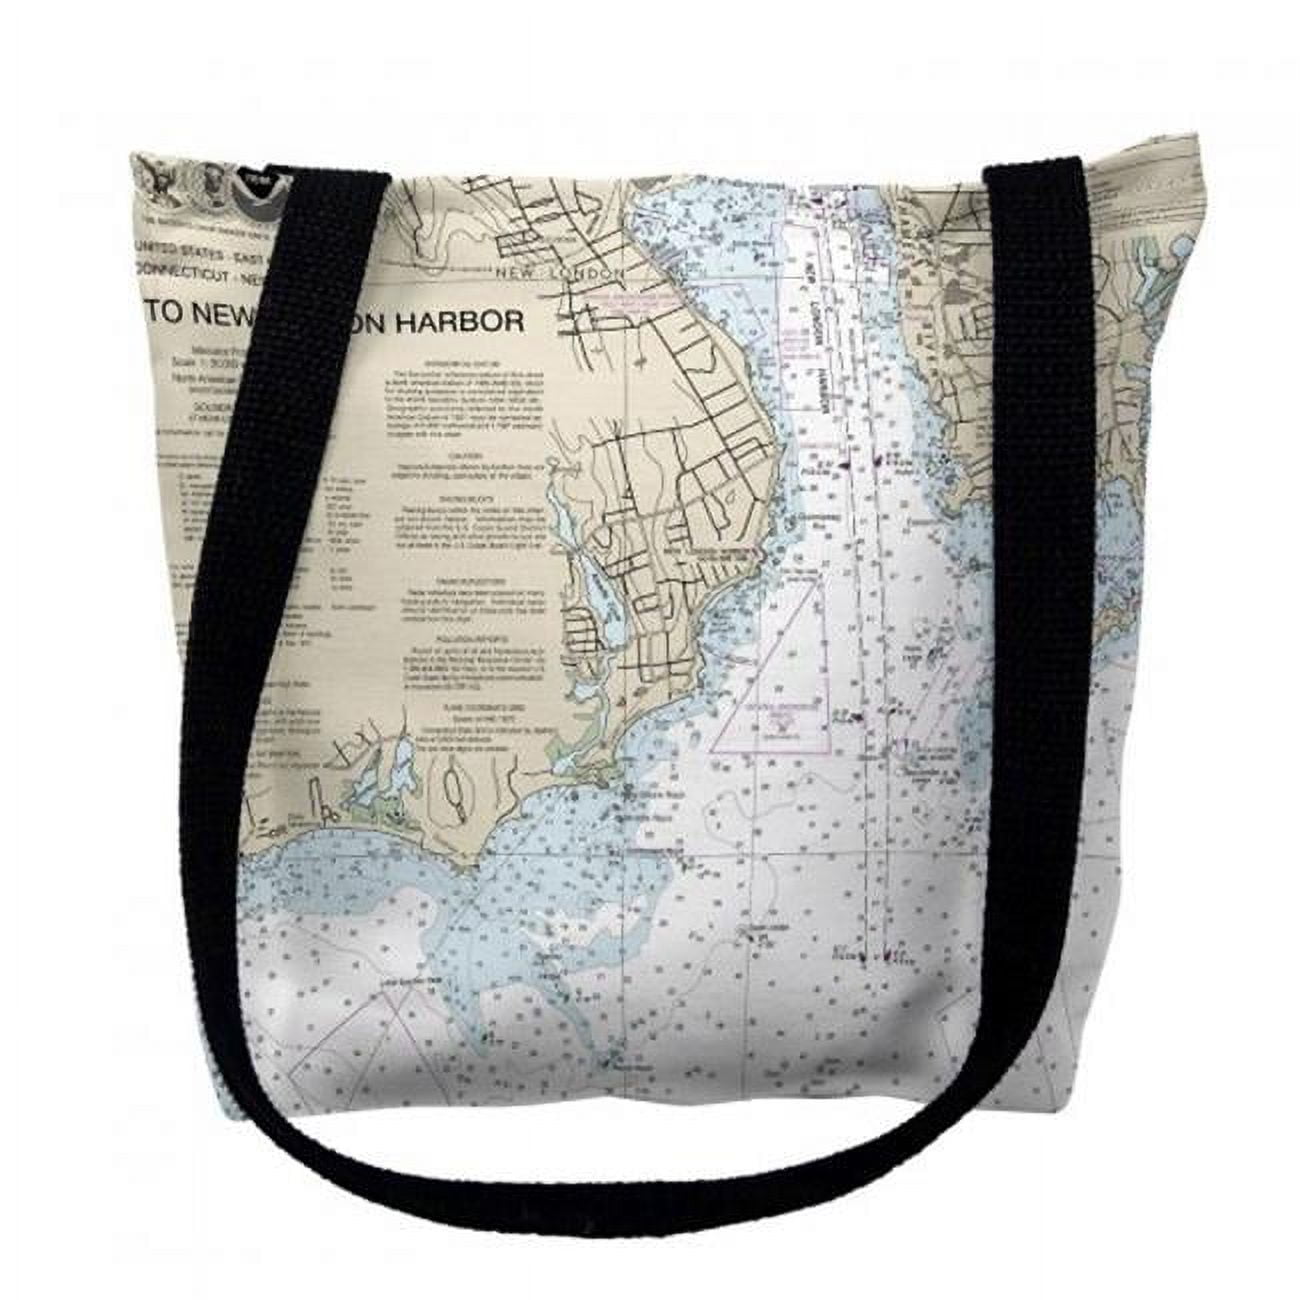 Ty13212nlm 16 X 16 In. New London Harbor Connecticut Nautical Map Tote Bag - Medium